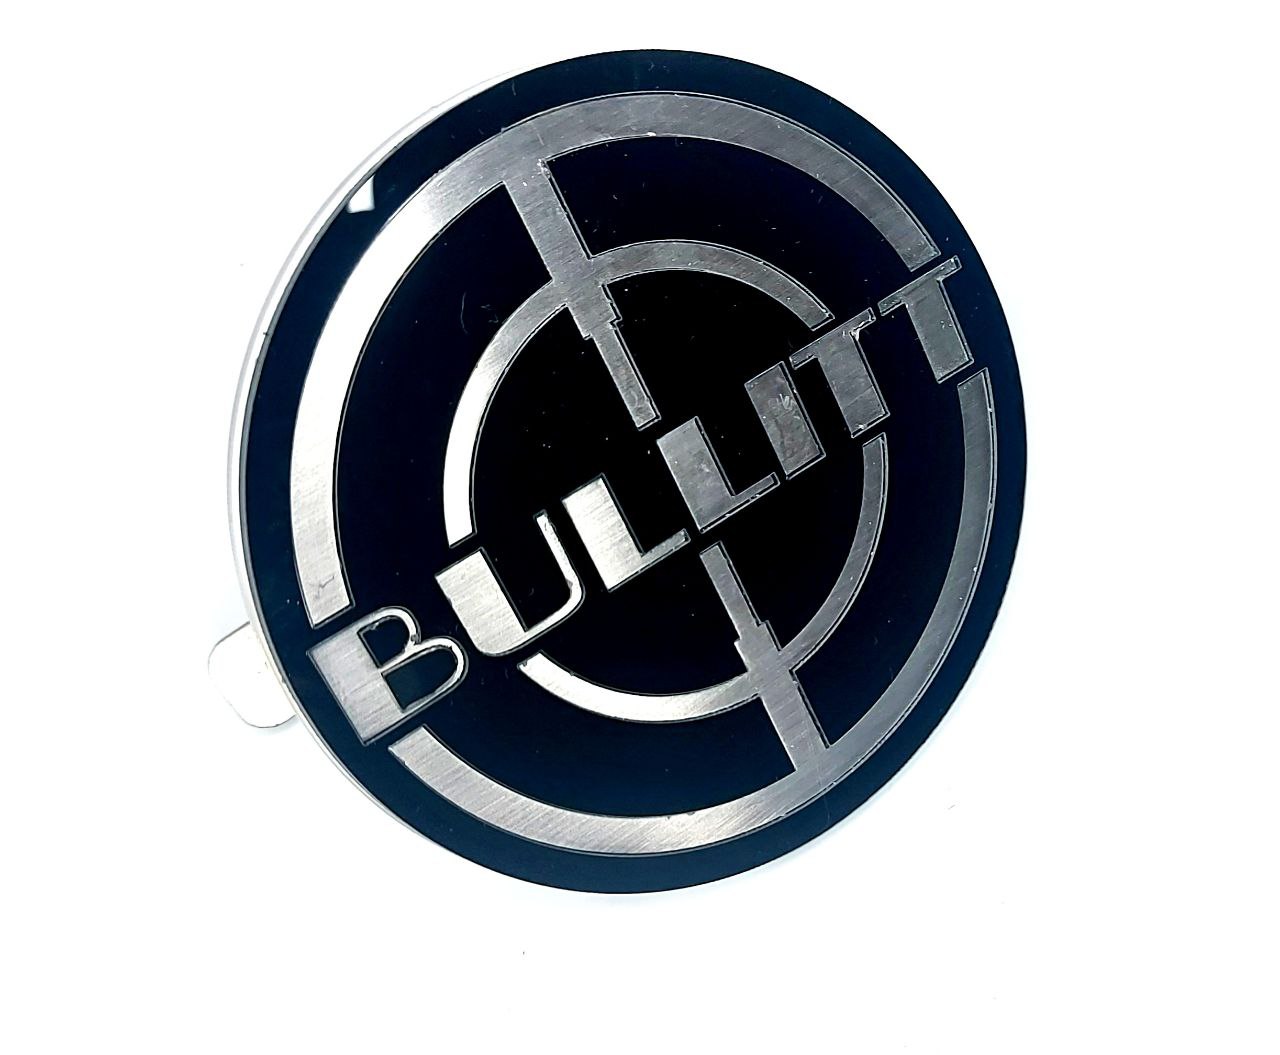 Ford Radiator grille emblem with Bullitt logo (type 2) - decoinfabric